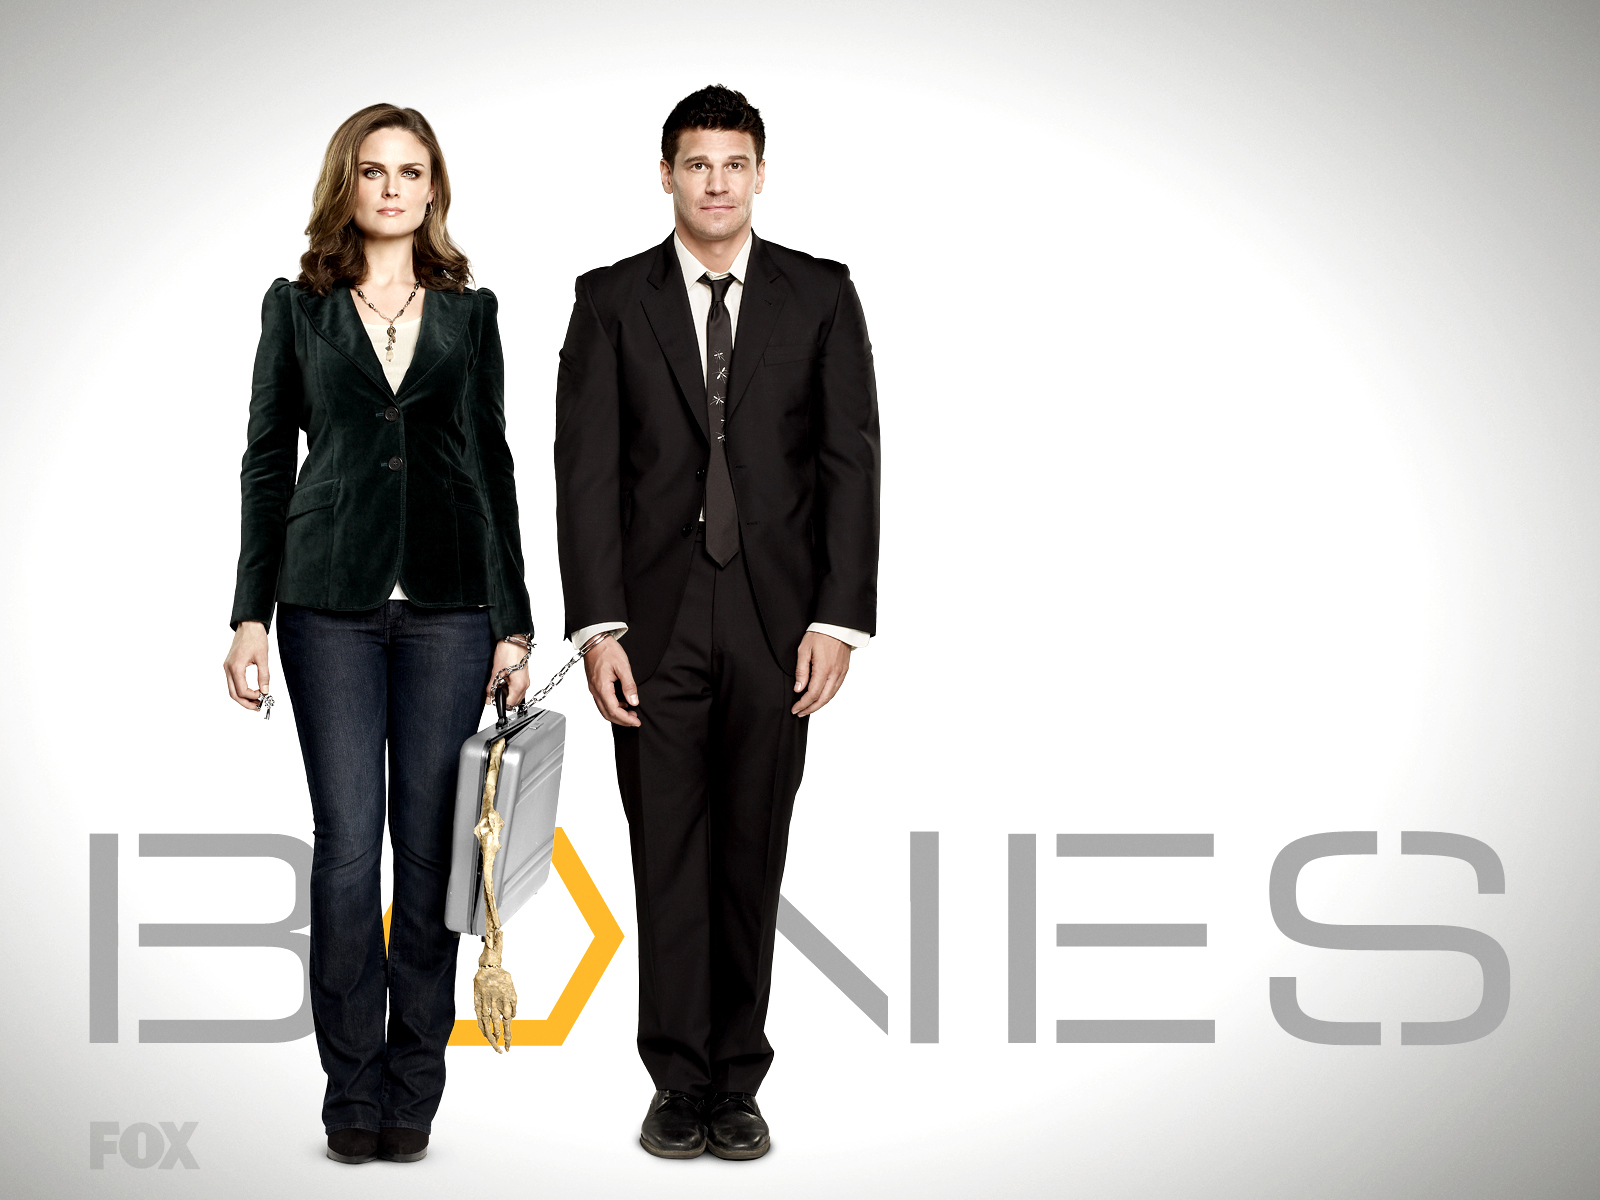 TV Show Bones HD Wallpaper | Background Image